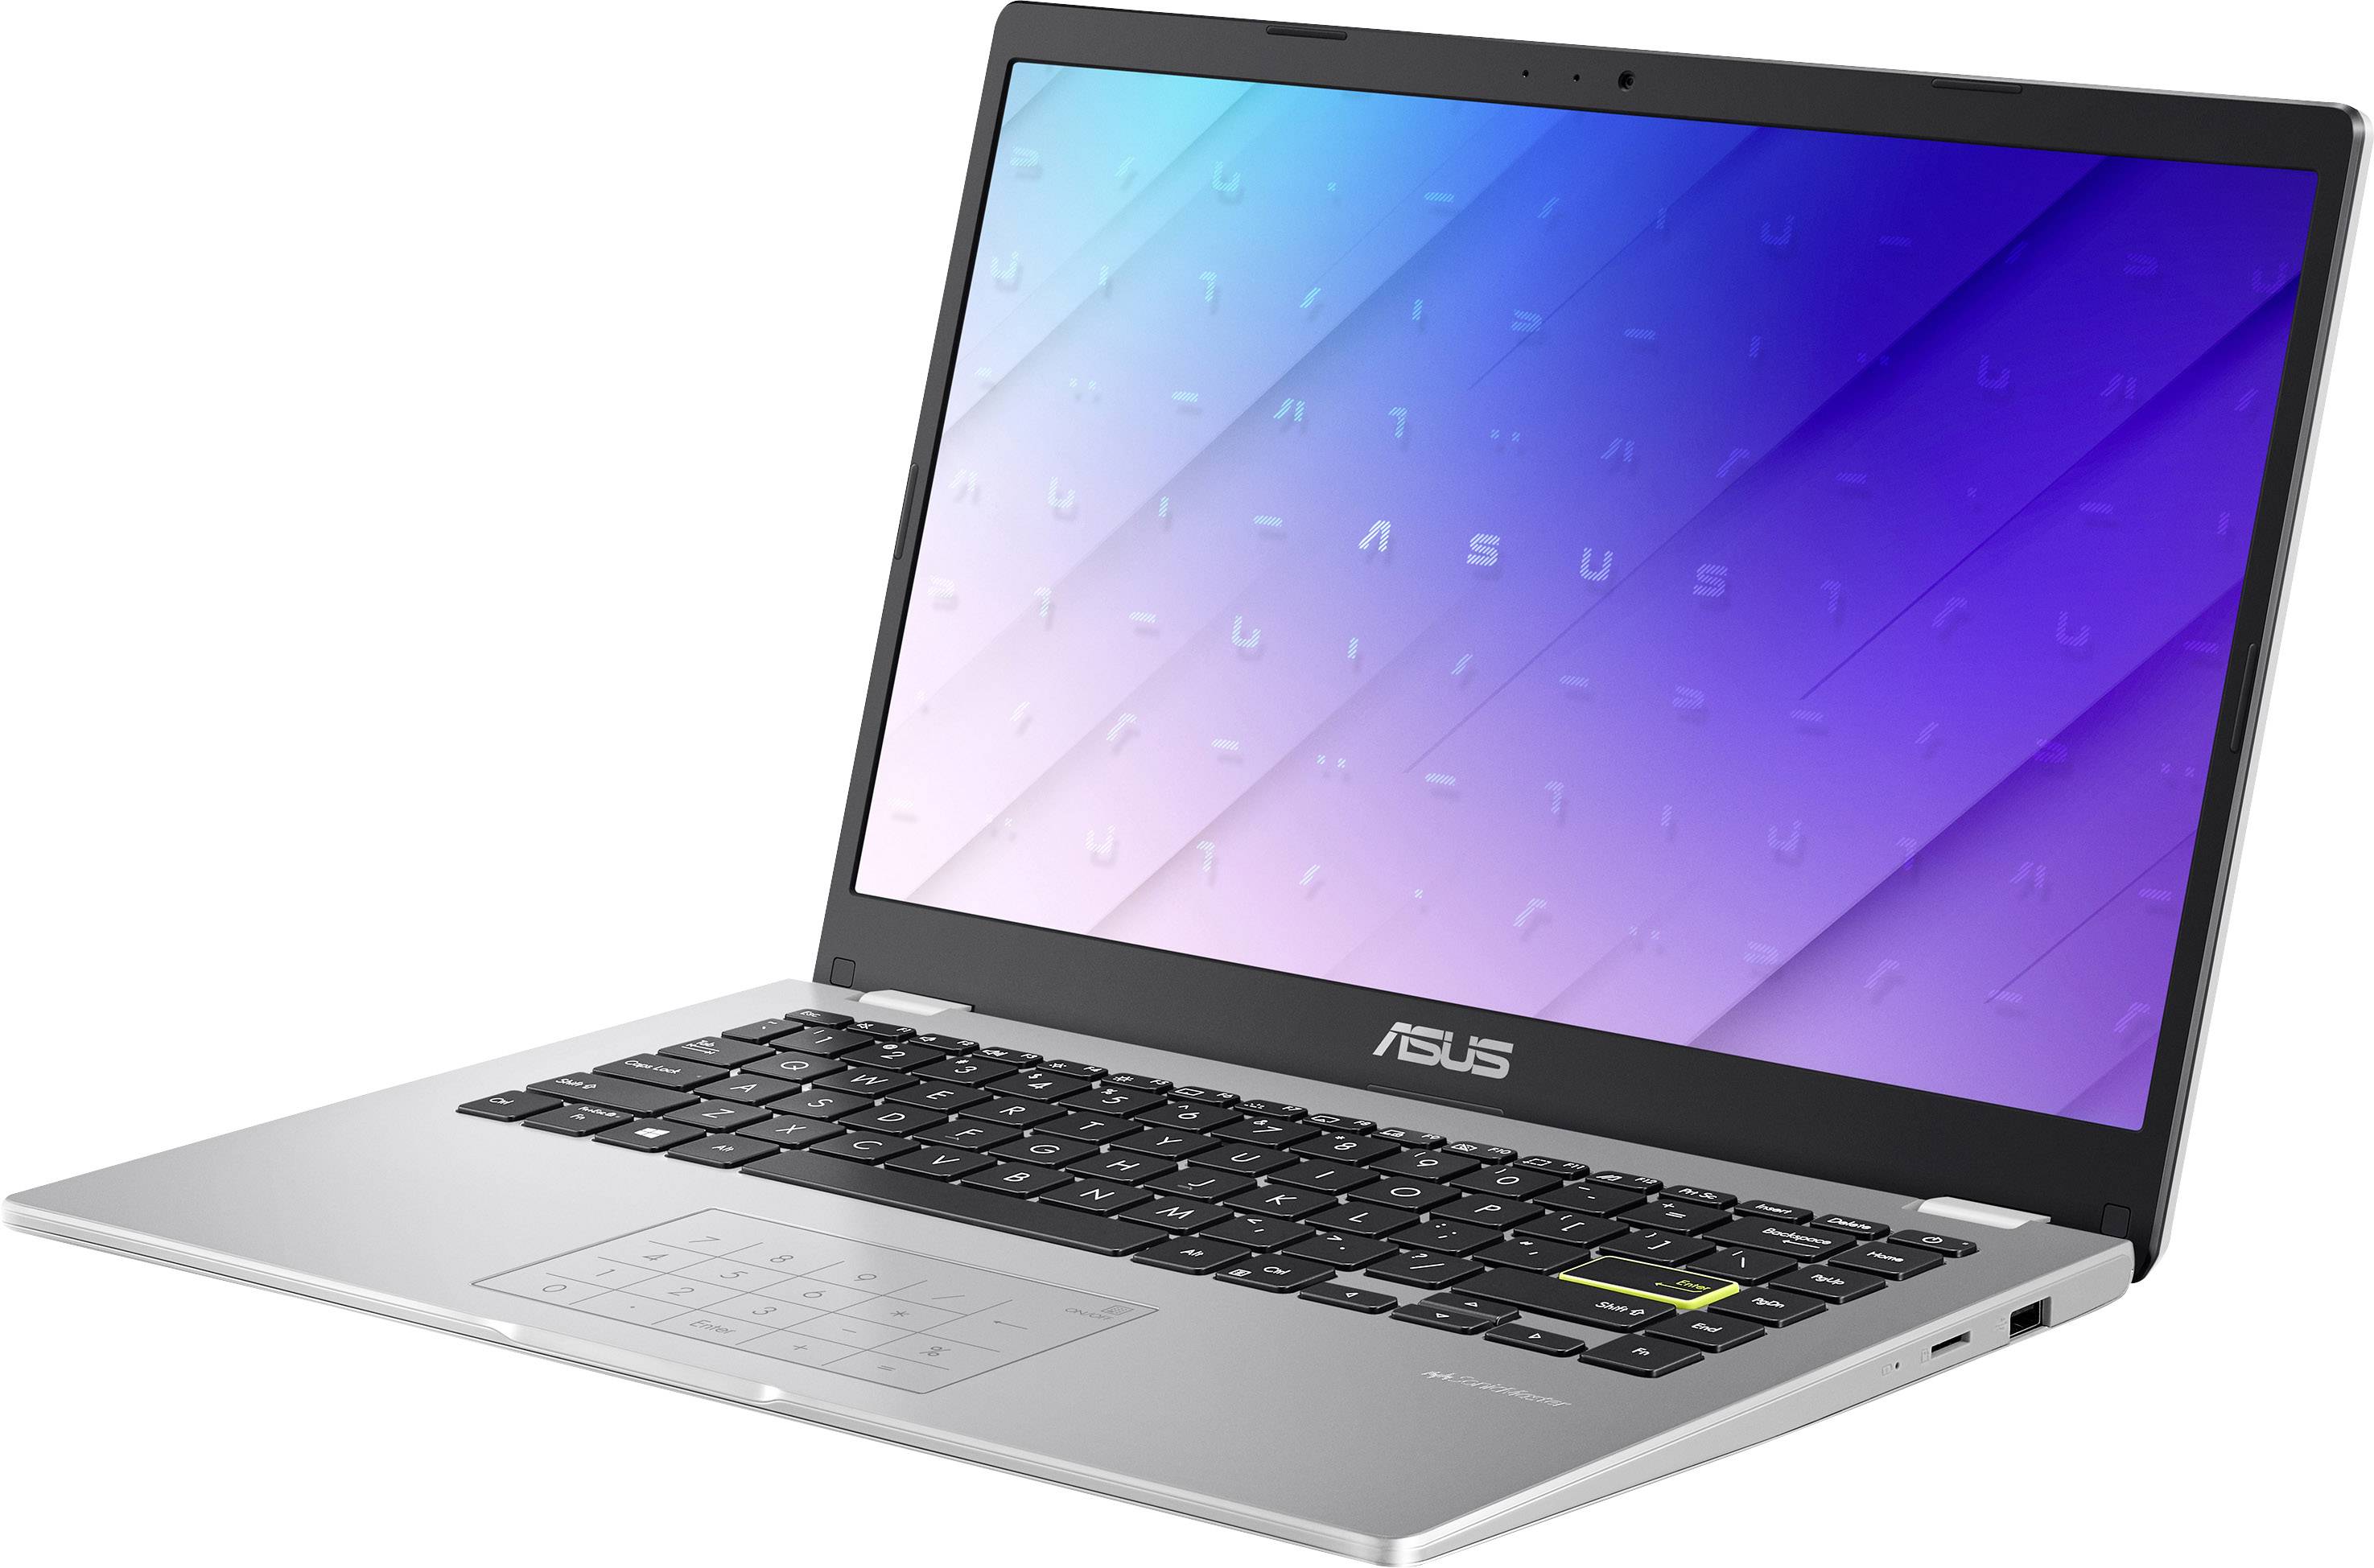 Asus Vivobook 14 E410ma 356 Cm 14 Inch Full Hd Laptop Intel® Pentium